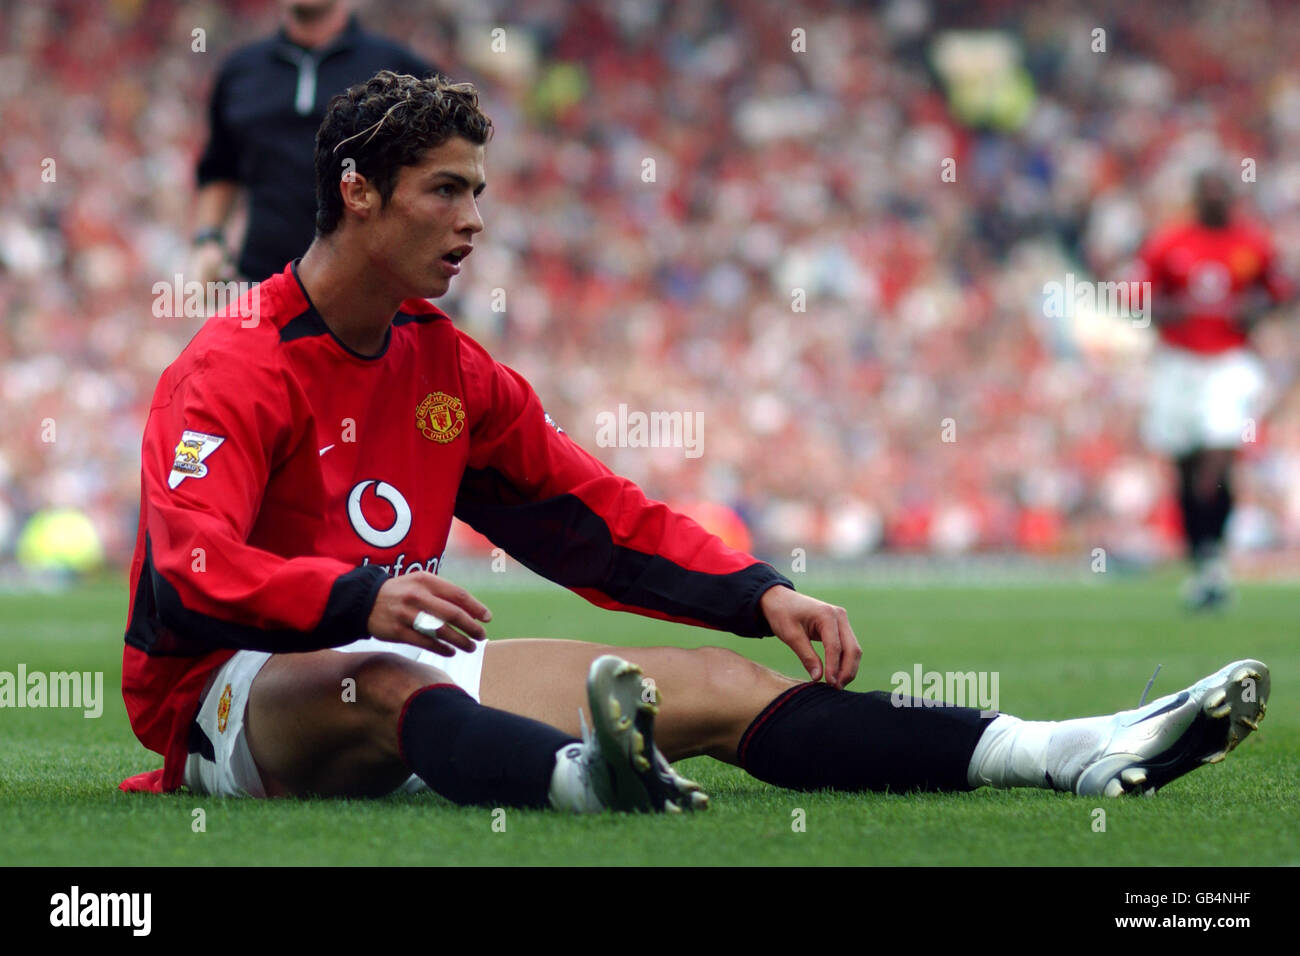 Soccer - FA Barclaycard Premiership - Manchester United v Bolton Wanderers. Cristiano Ronaldo, Manchester United Stock Photo